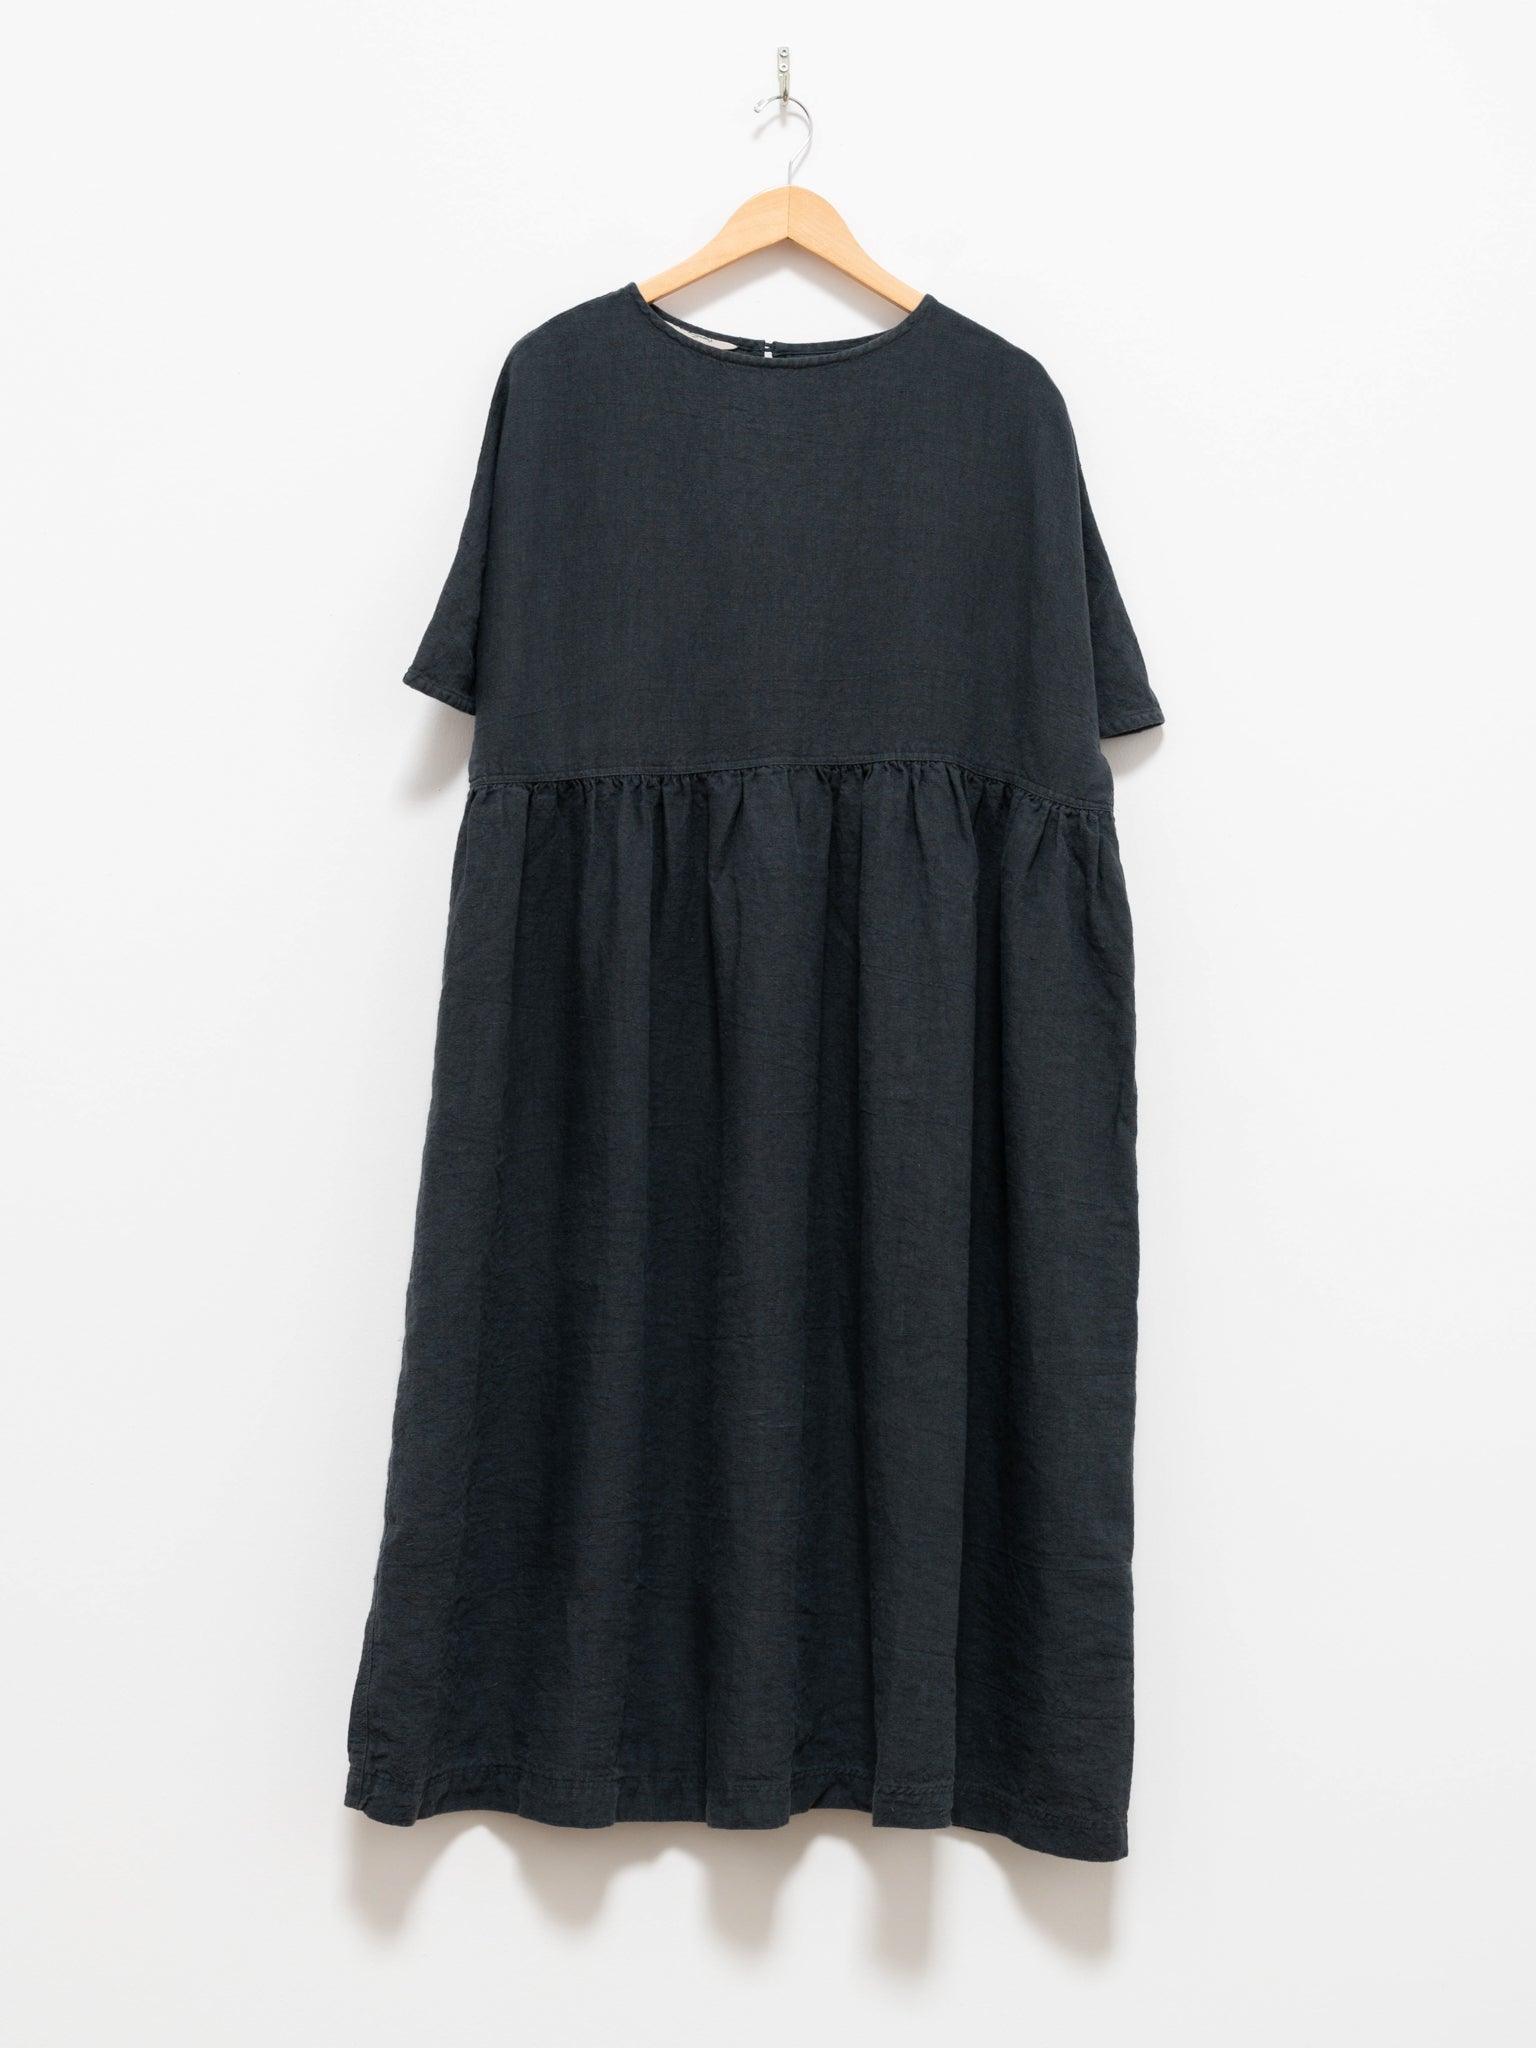 Namu Shop - Ichi Antiquites Azumadaki Dress - Charcoal